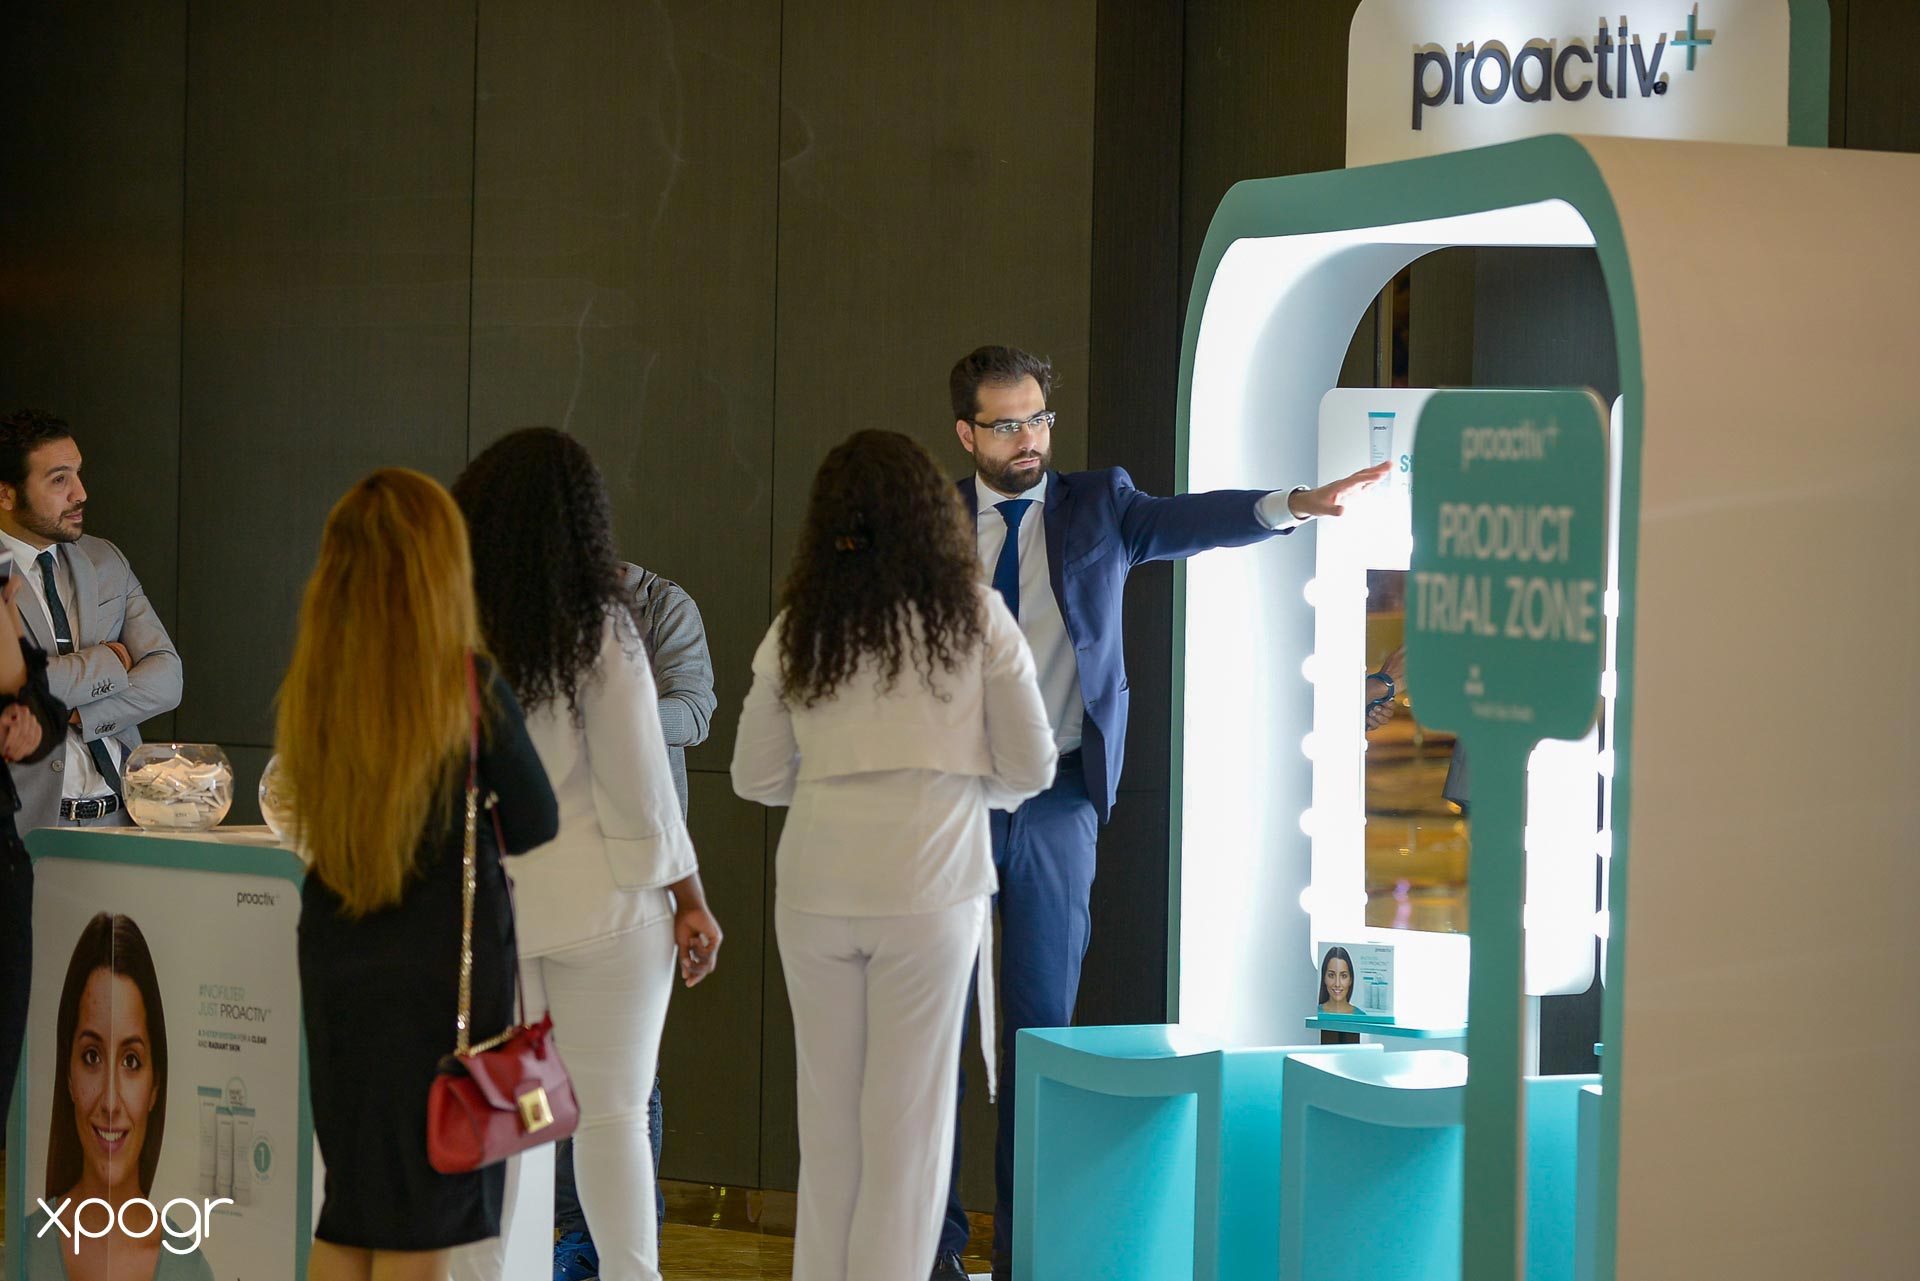 xpogr ProActiv Launch Event Dubai Abudhabi